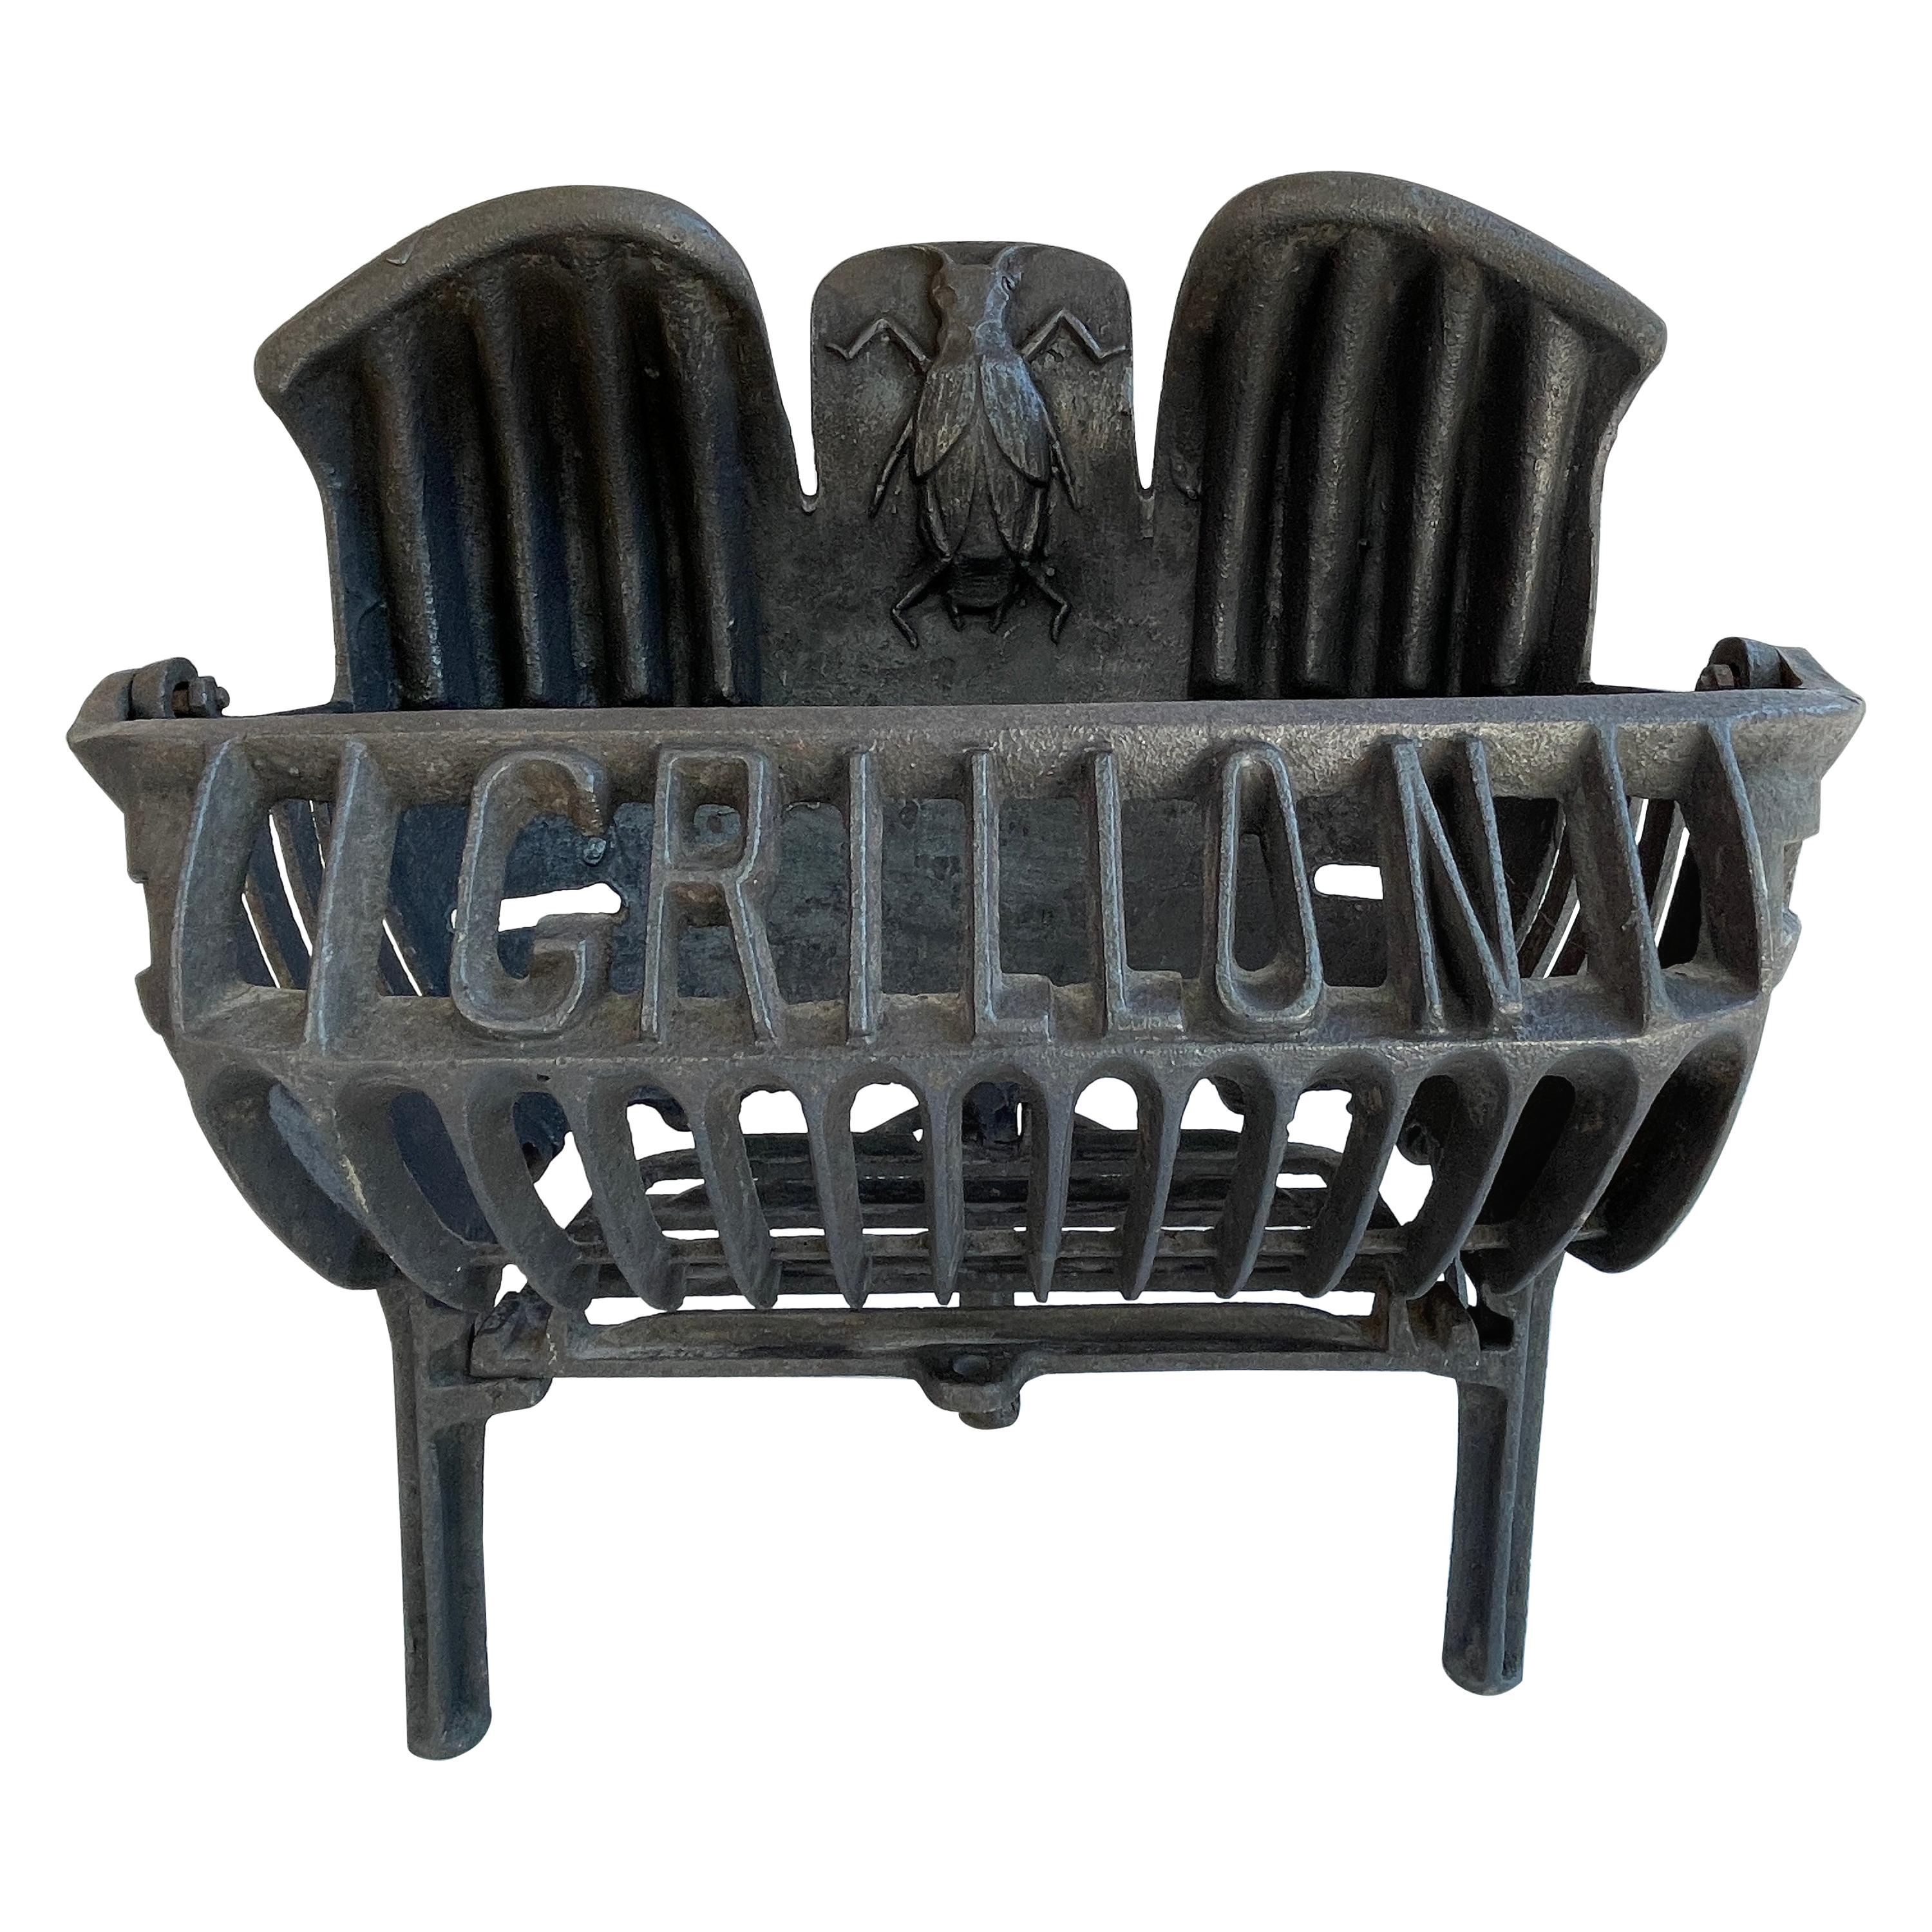 Antique France Cast Iron Fireplace Grate or Basket "Grillon" For Sale